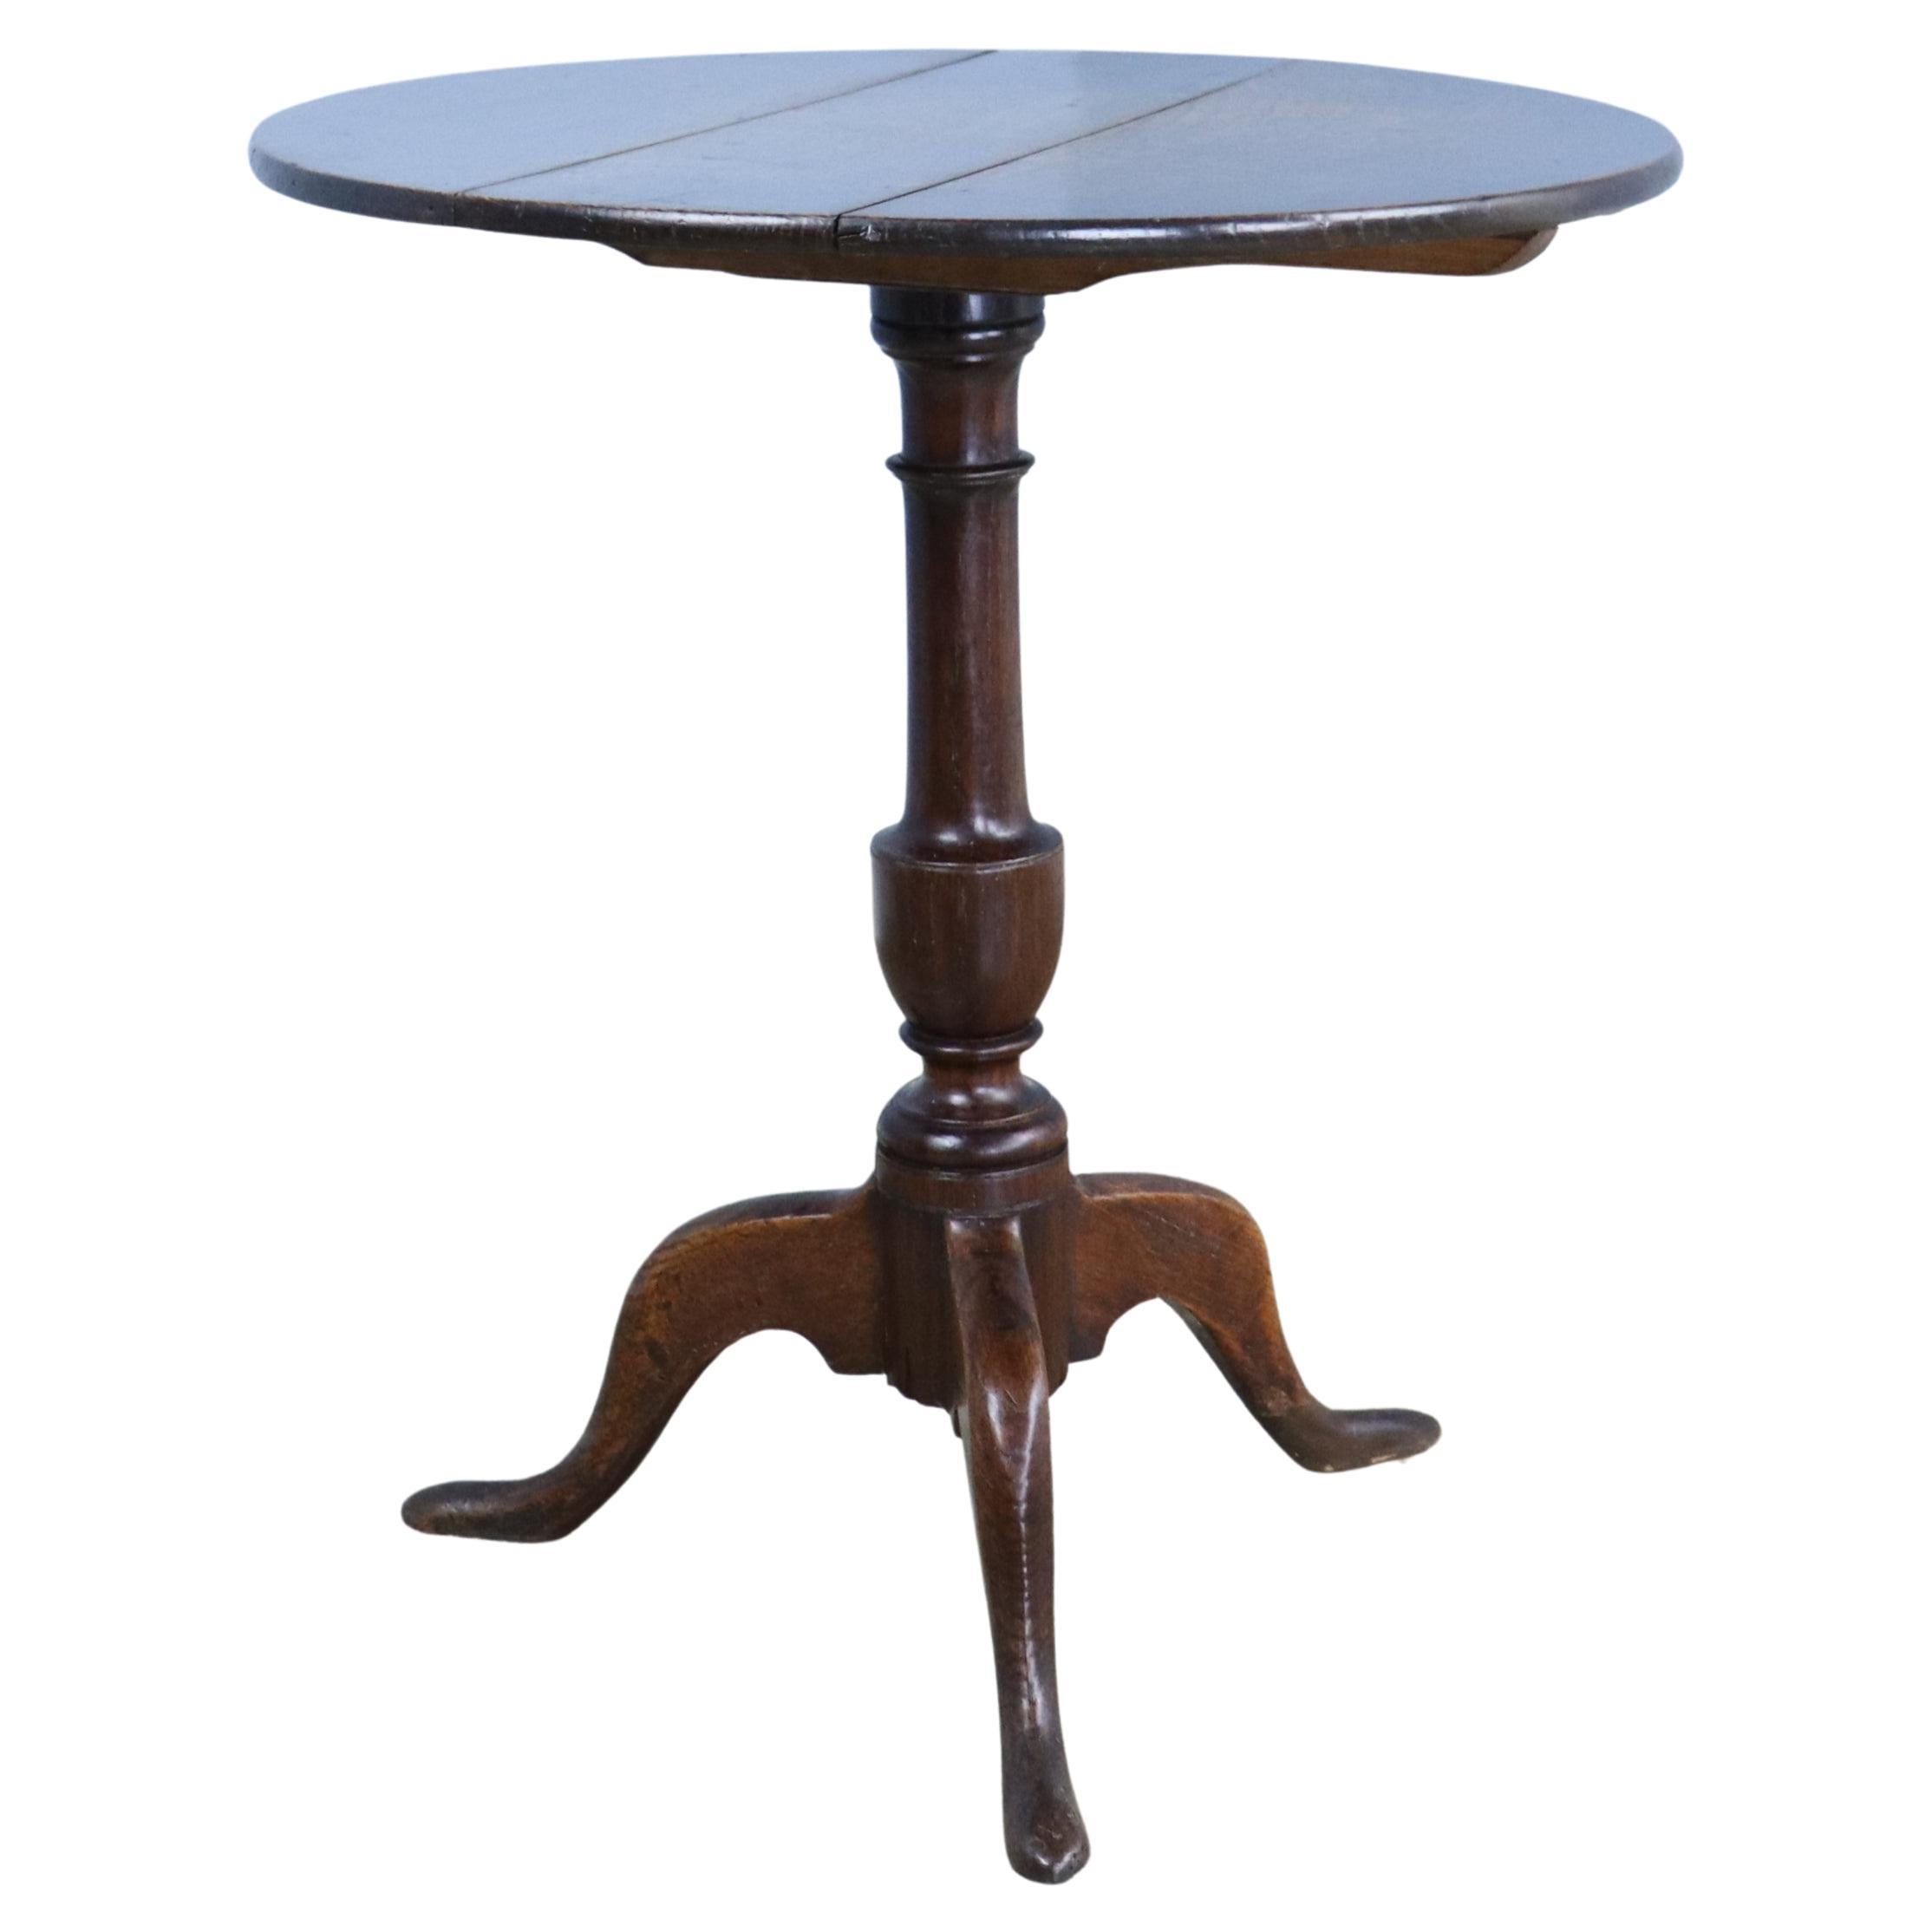 Georgian Period Oak Tripod Based Lamp Table